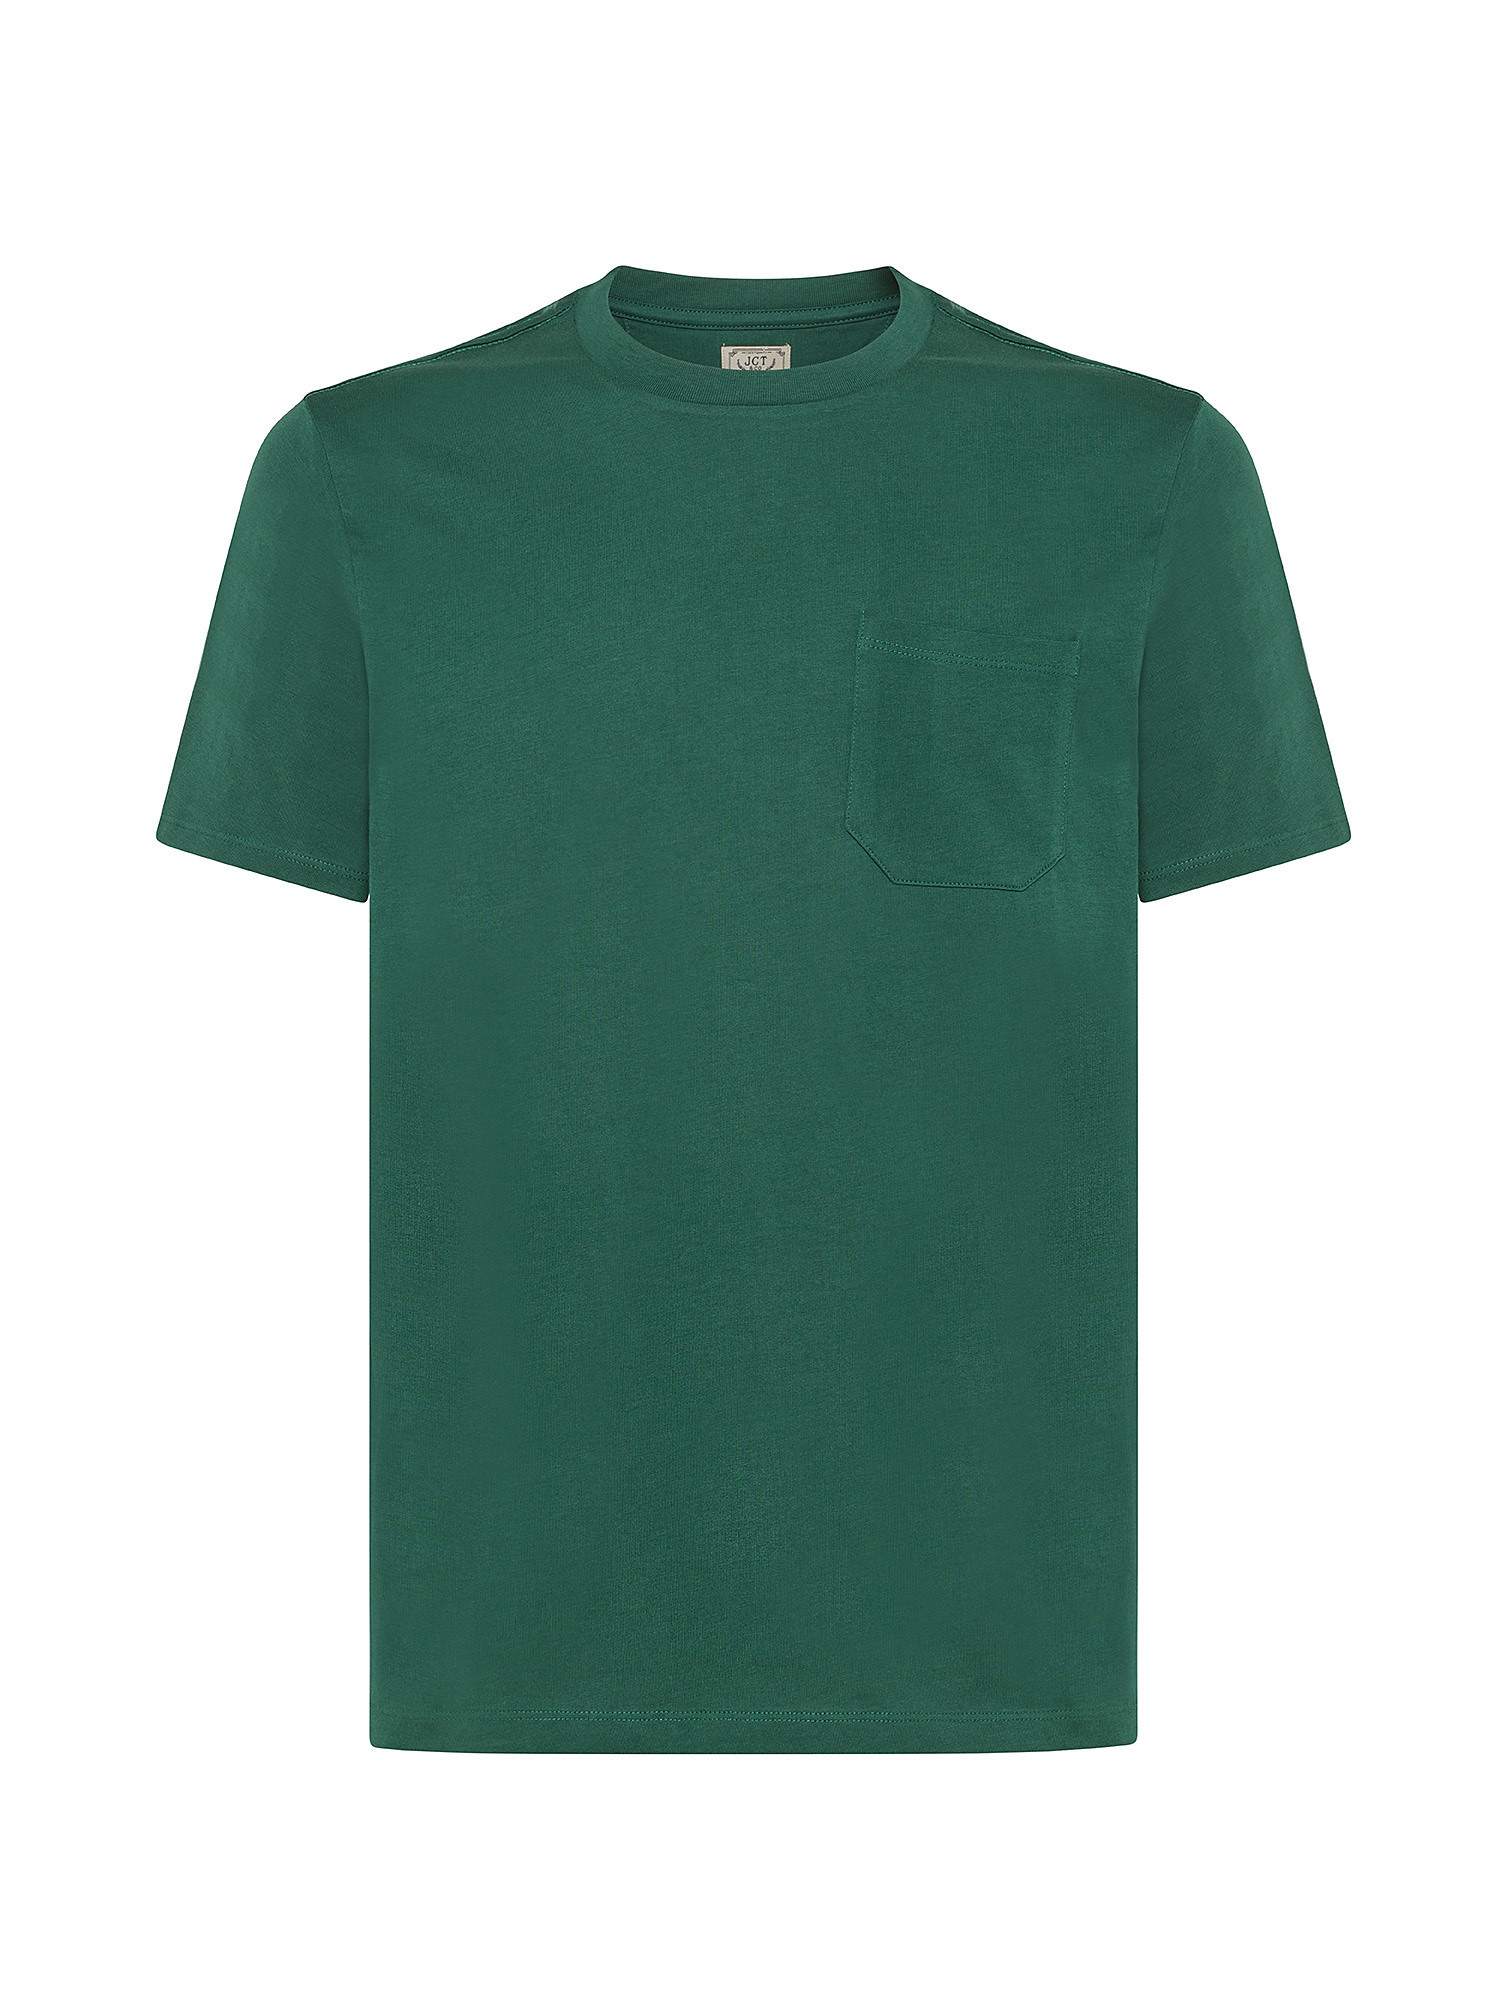 JCT - Pure supima cotton T-shirt, Dark Green, large image number 0